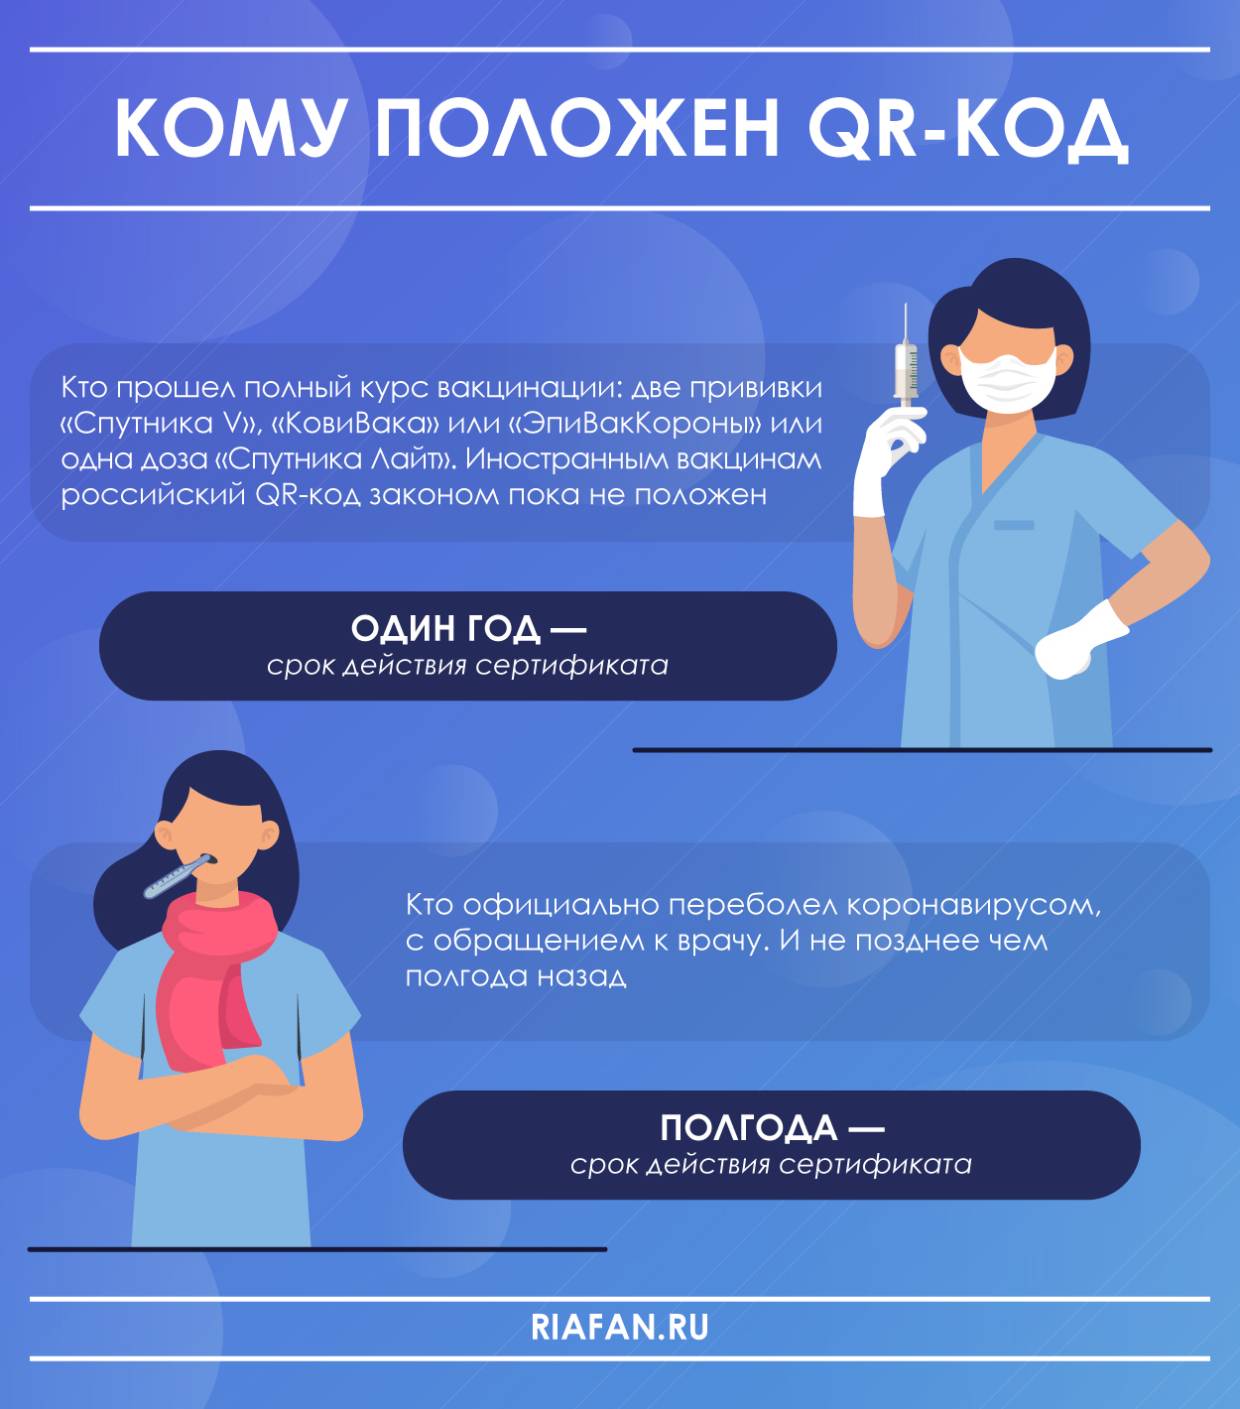 Вакцинация от COVID-19 в Петербурге: как получить медотвод, дадут ли по справке QR-код